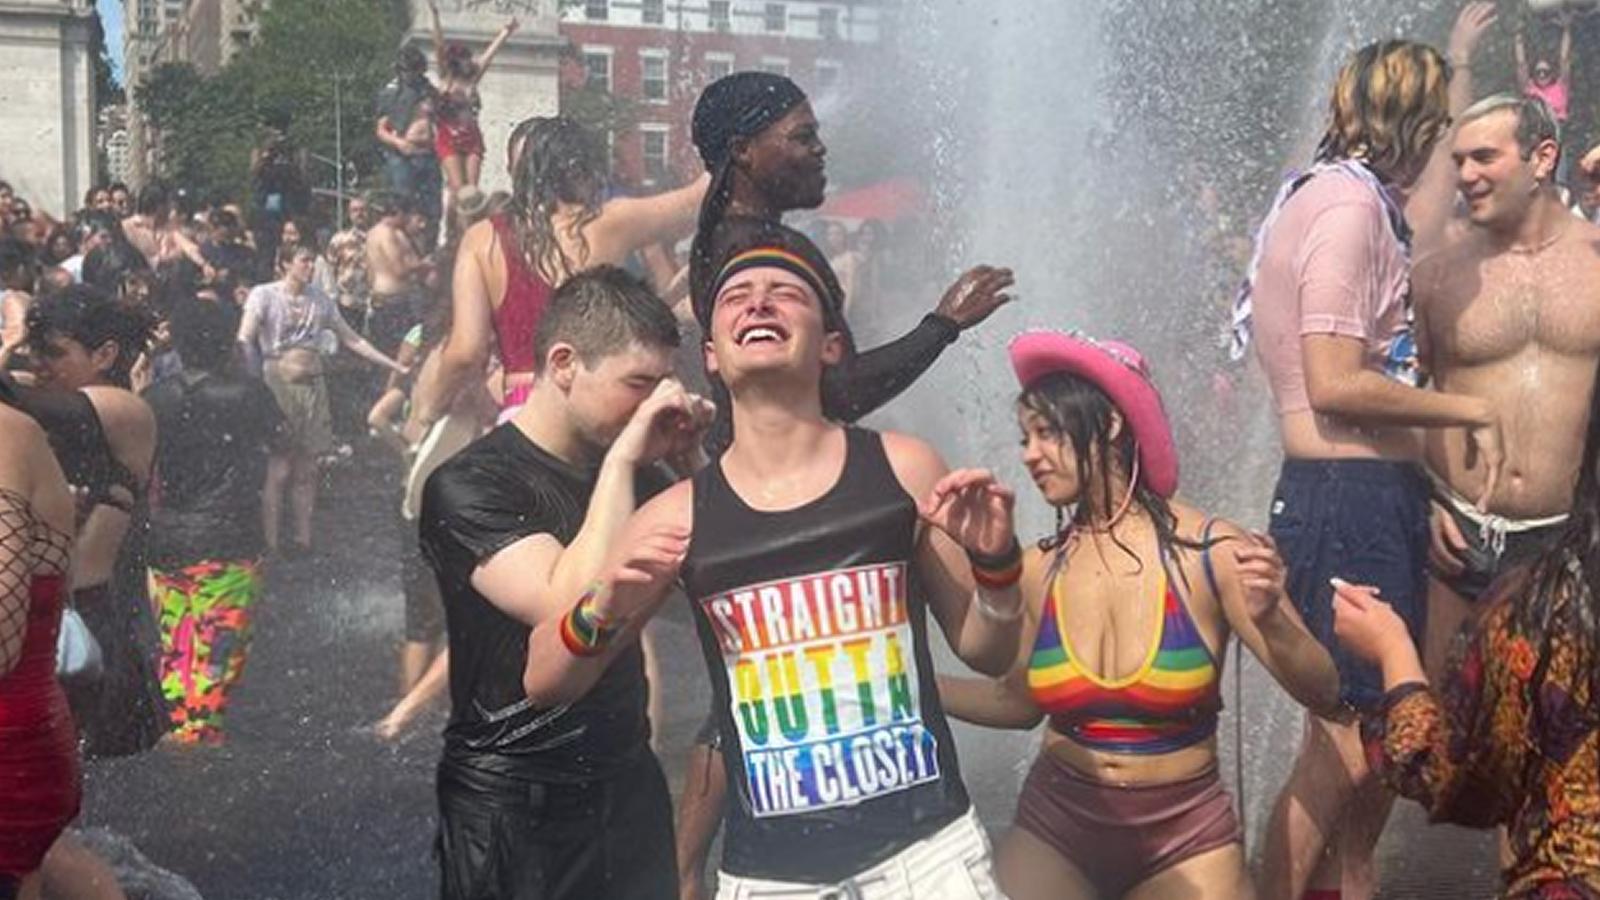 Stranger Things actor Noah Schnapp shares photos celebrating his first Pride parade